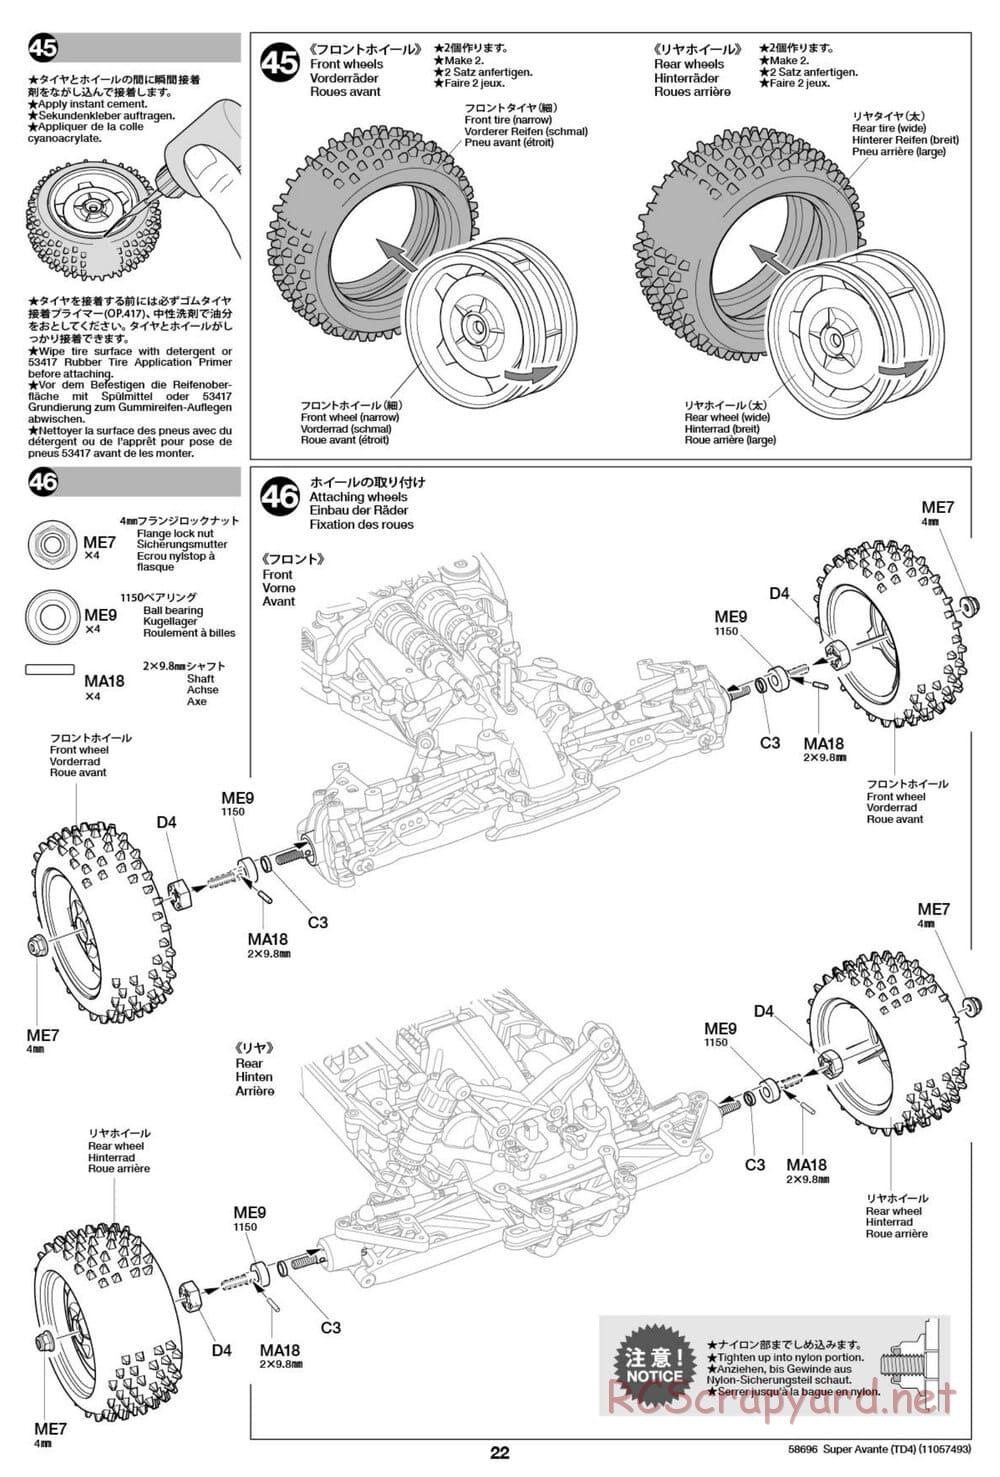 Tamiya - Super Avante - TD4 Chassis - Manual - Page 23